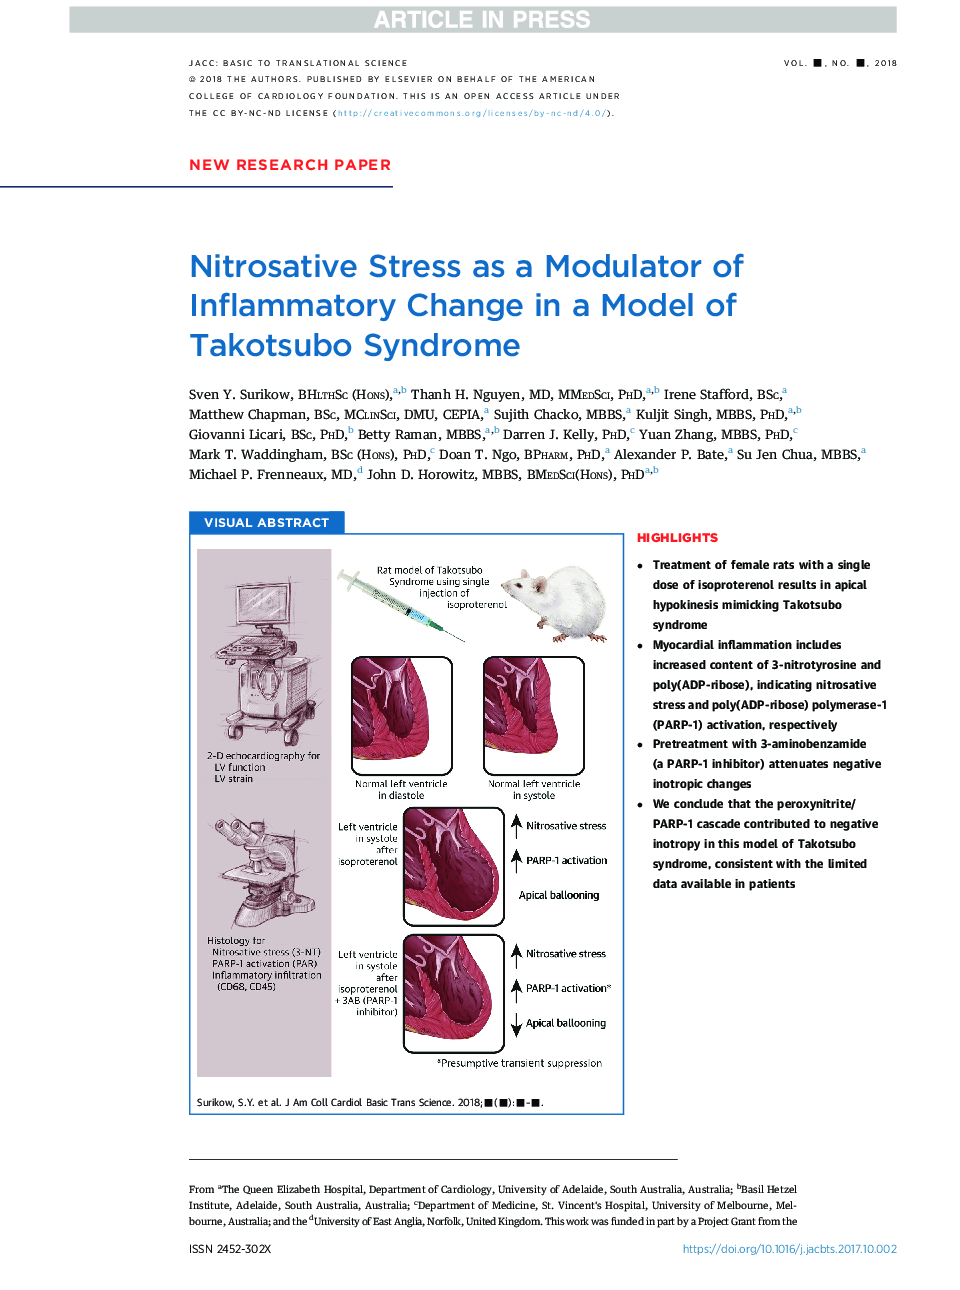 Nitrosative Stress as a Modulator of Inflammatory Change in a Model of Takotsubo Syndrome